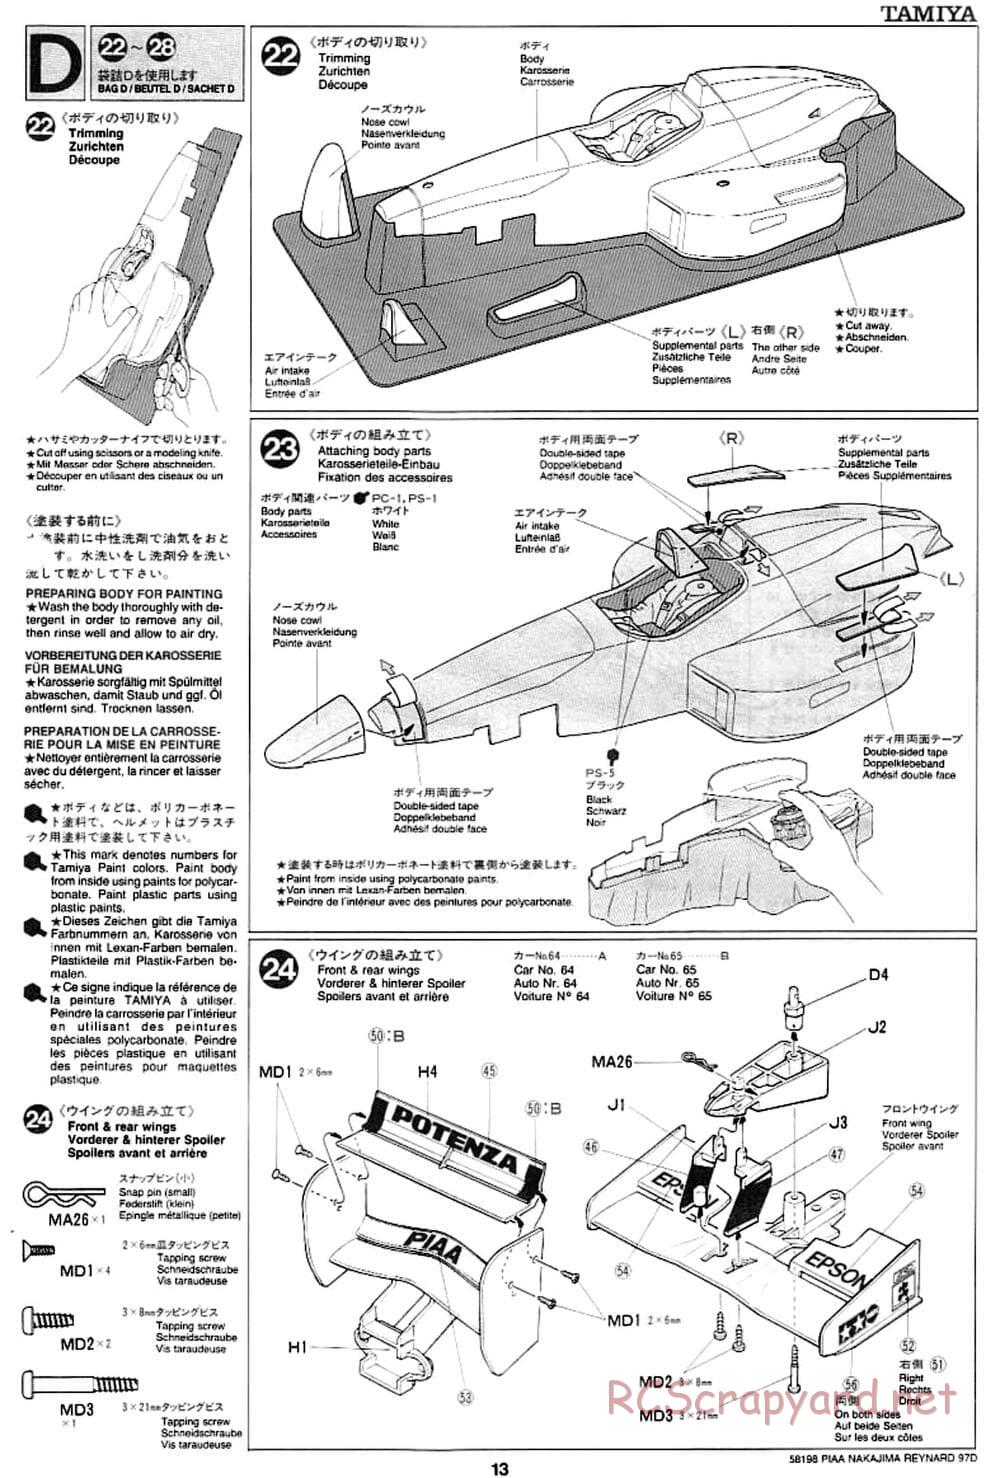 Tamiya - PIAA Nakajima Reynard 97D - F103 Chassis - Manuel - Page 13